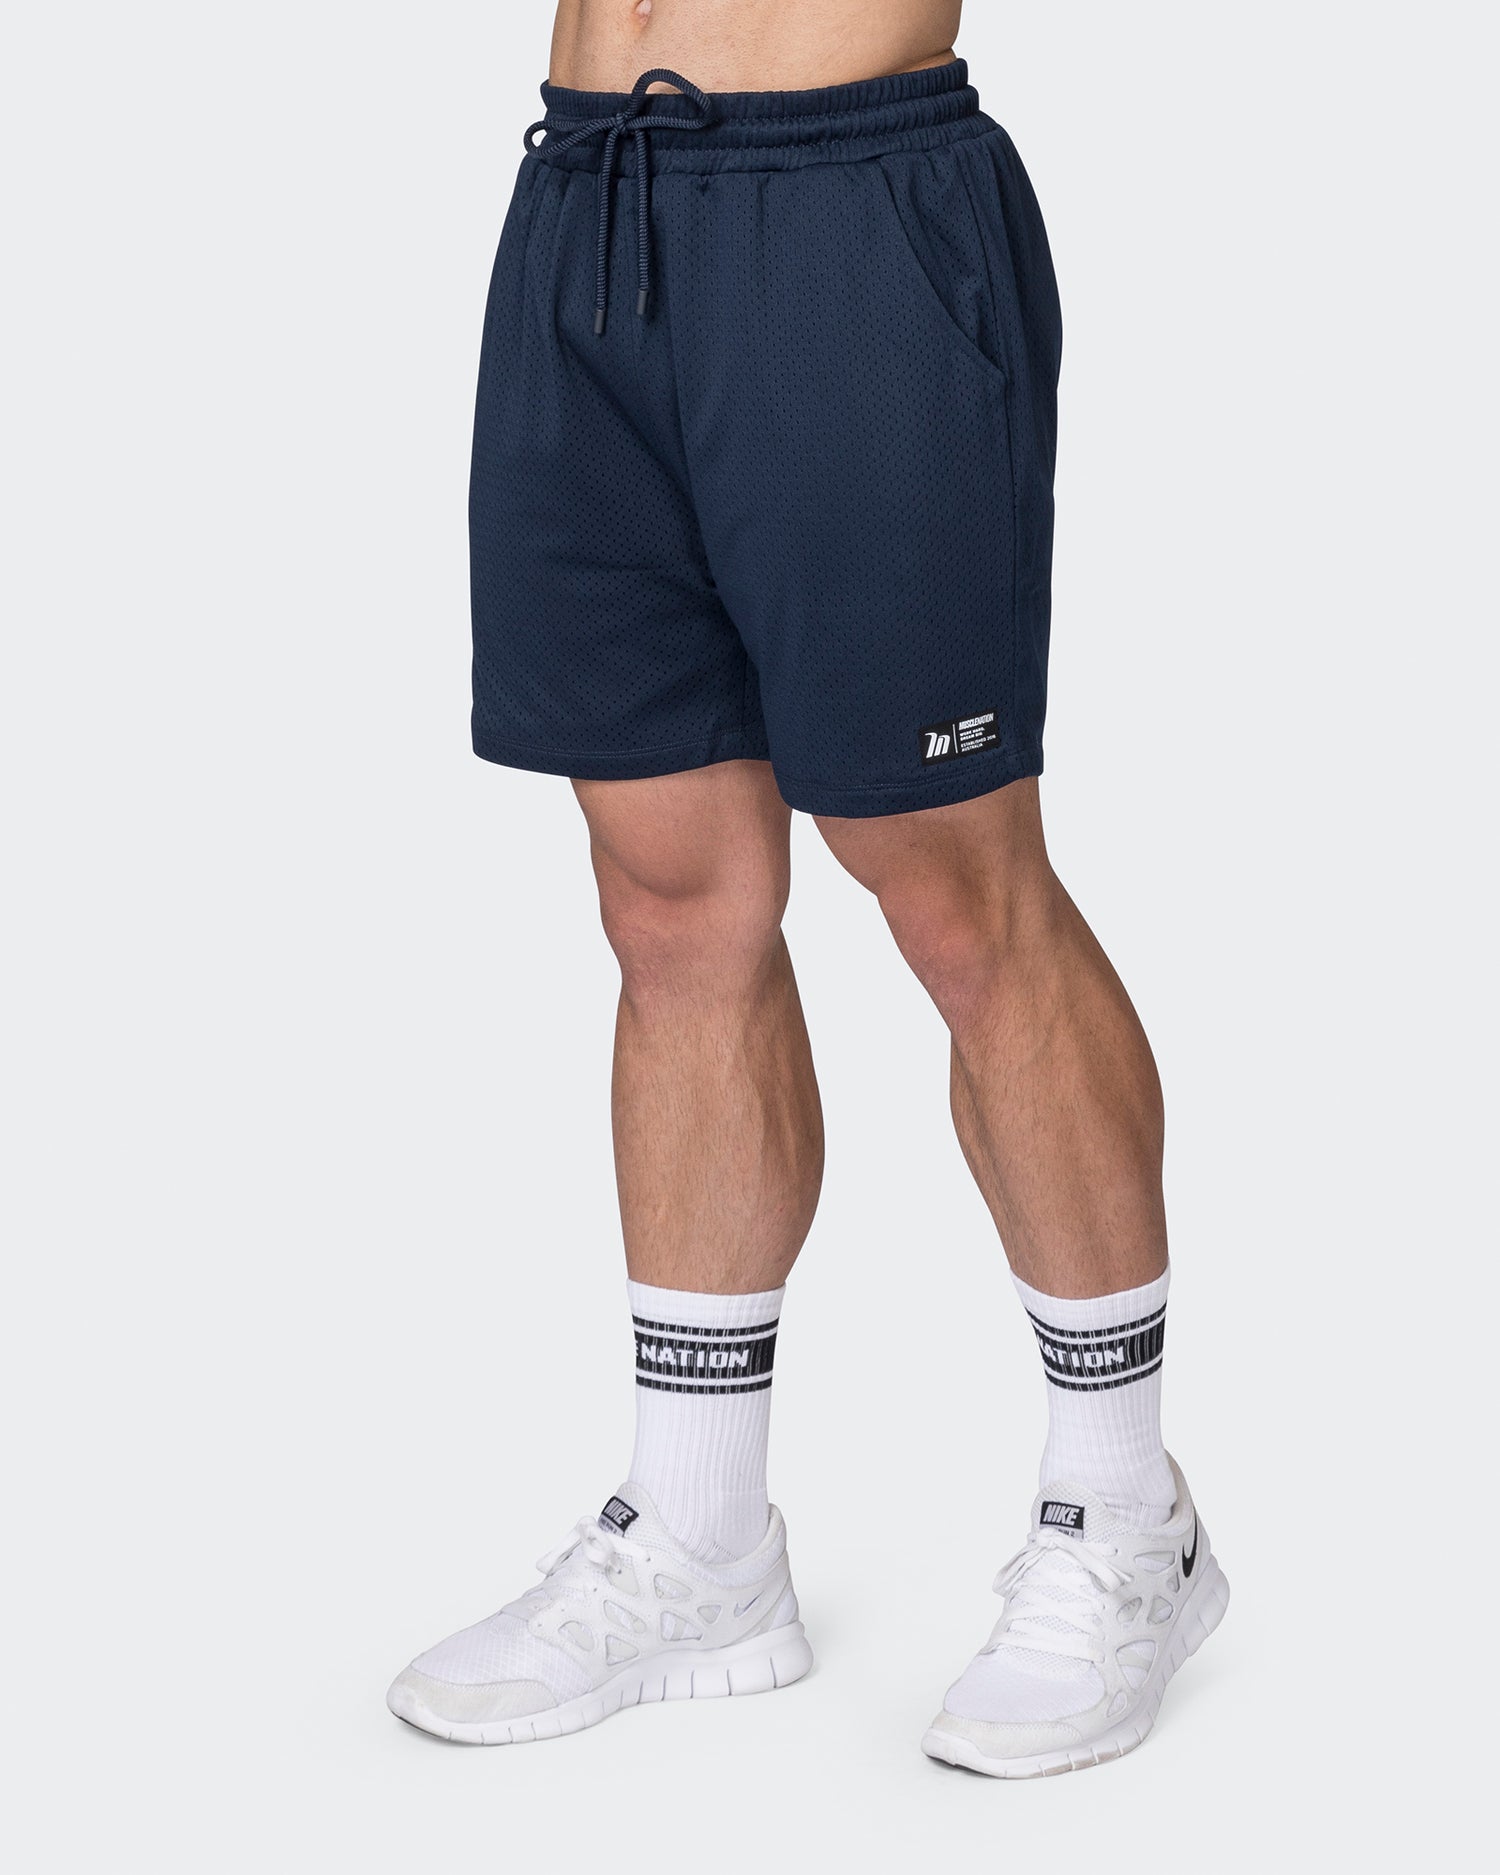 Lay Up 5" Shorts - Odyssey